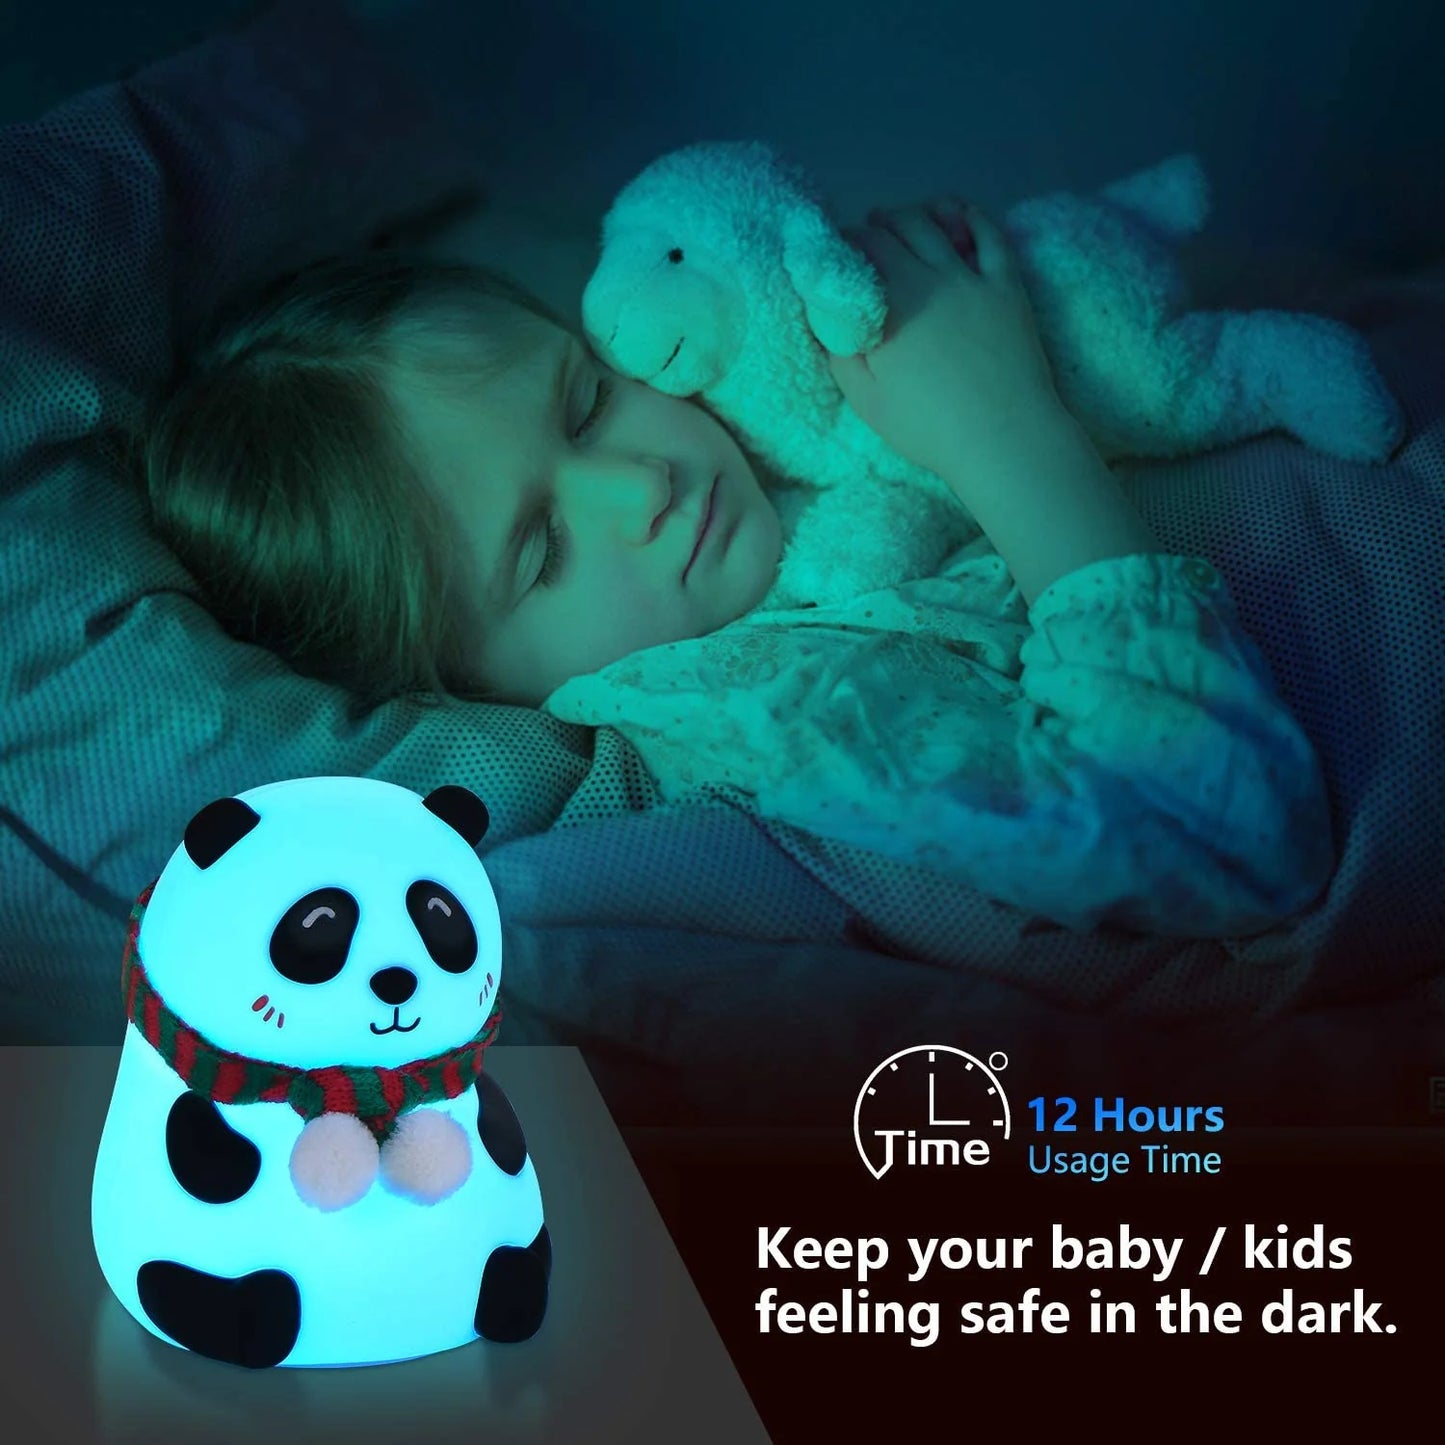 7 Color Change Panda LED Lamp 50% OFF 🔥